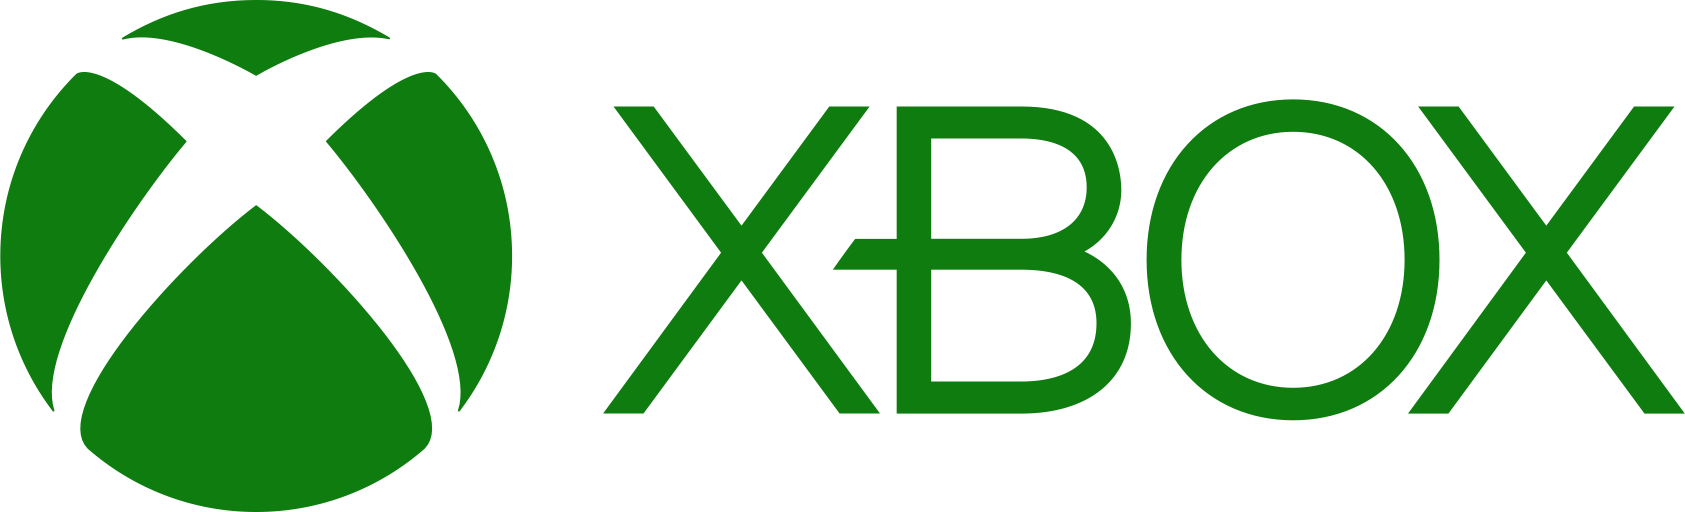 Xbox Transparant Image